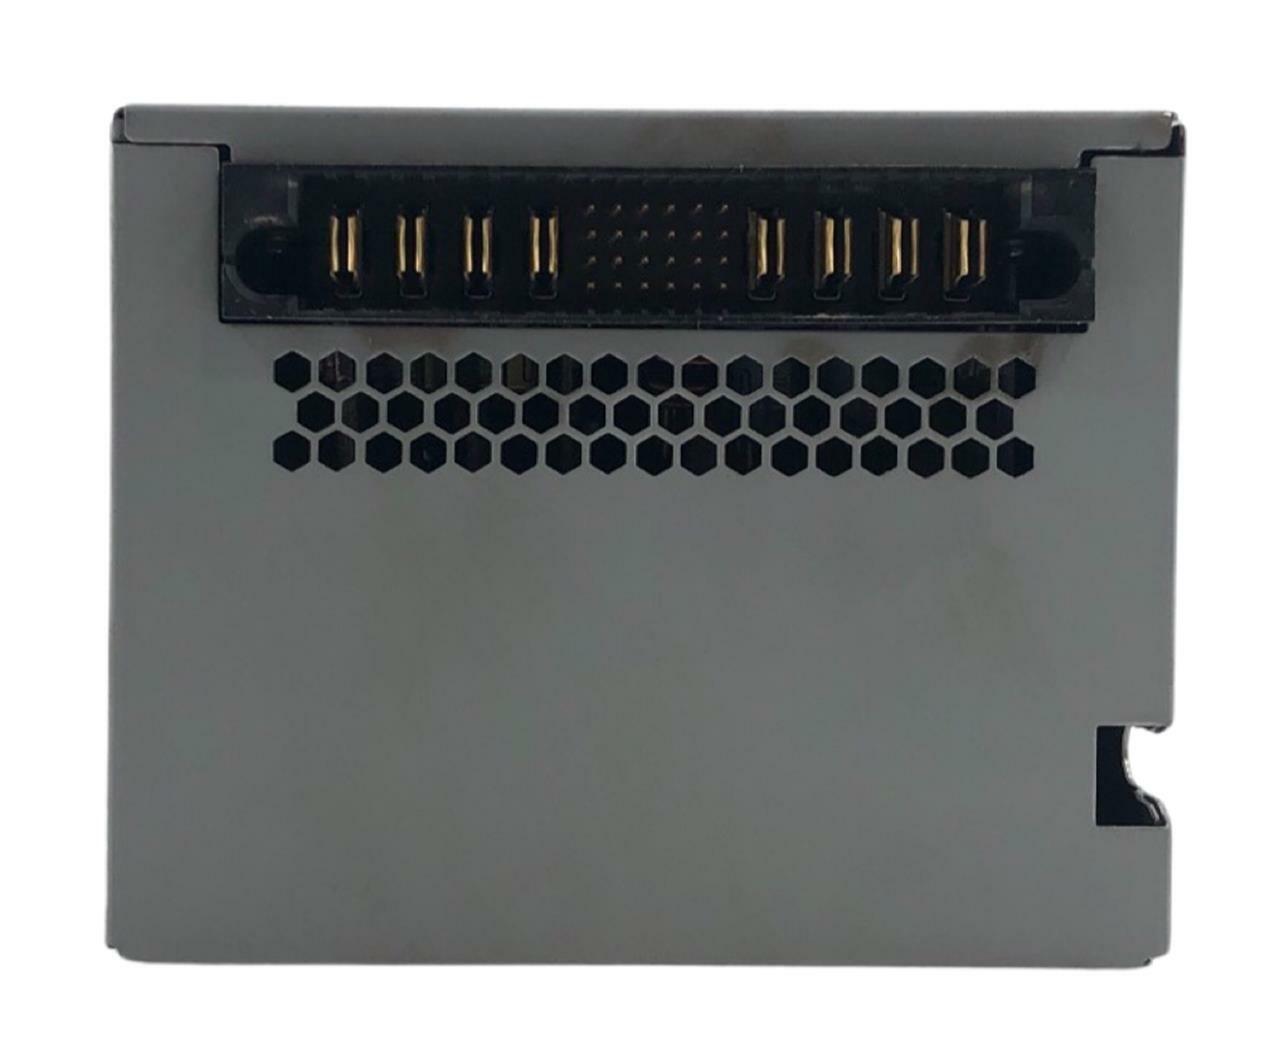 NetApp HB-PCM01-580-AC 580W 50-60Hz Power Supply Unit PSU